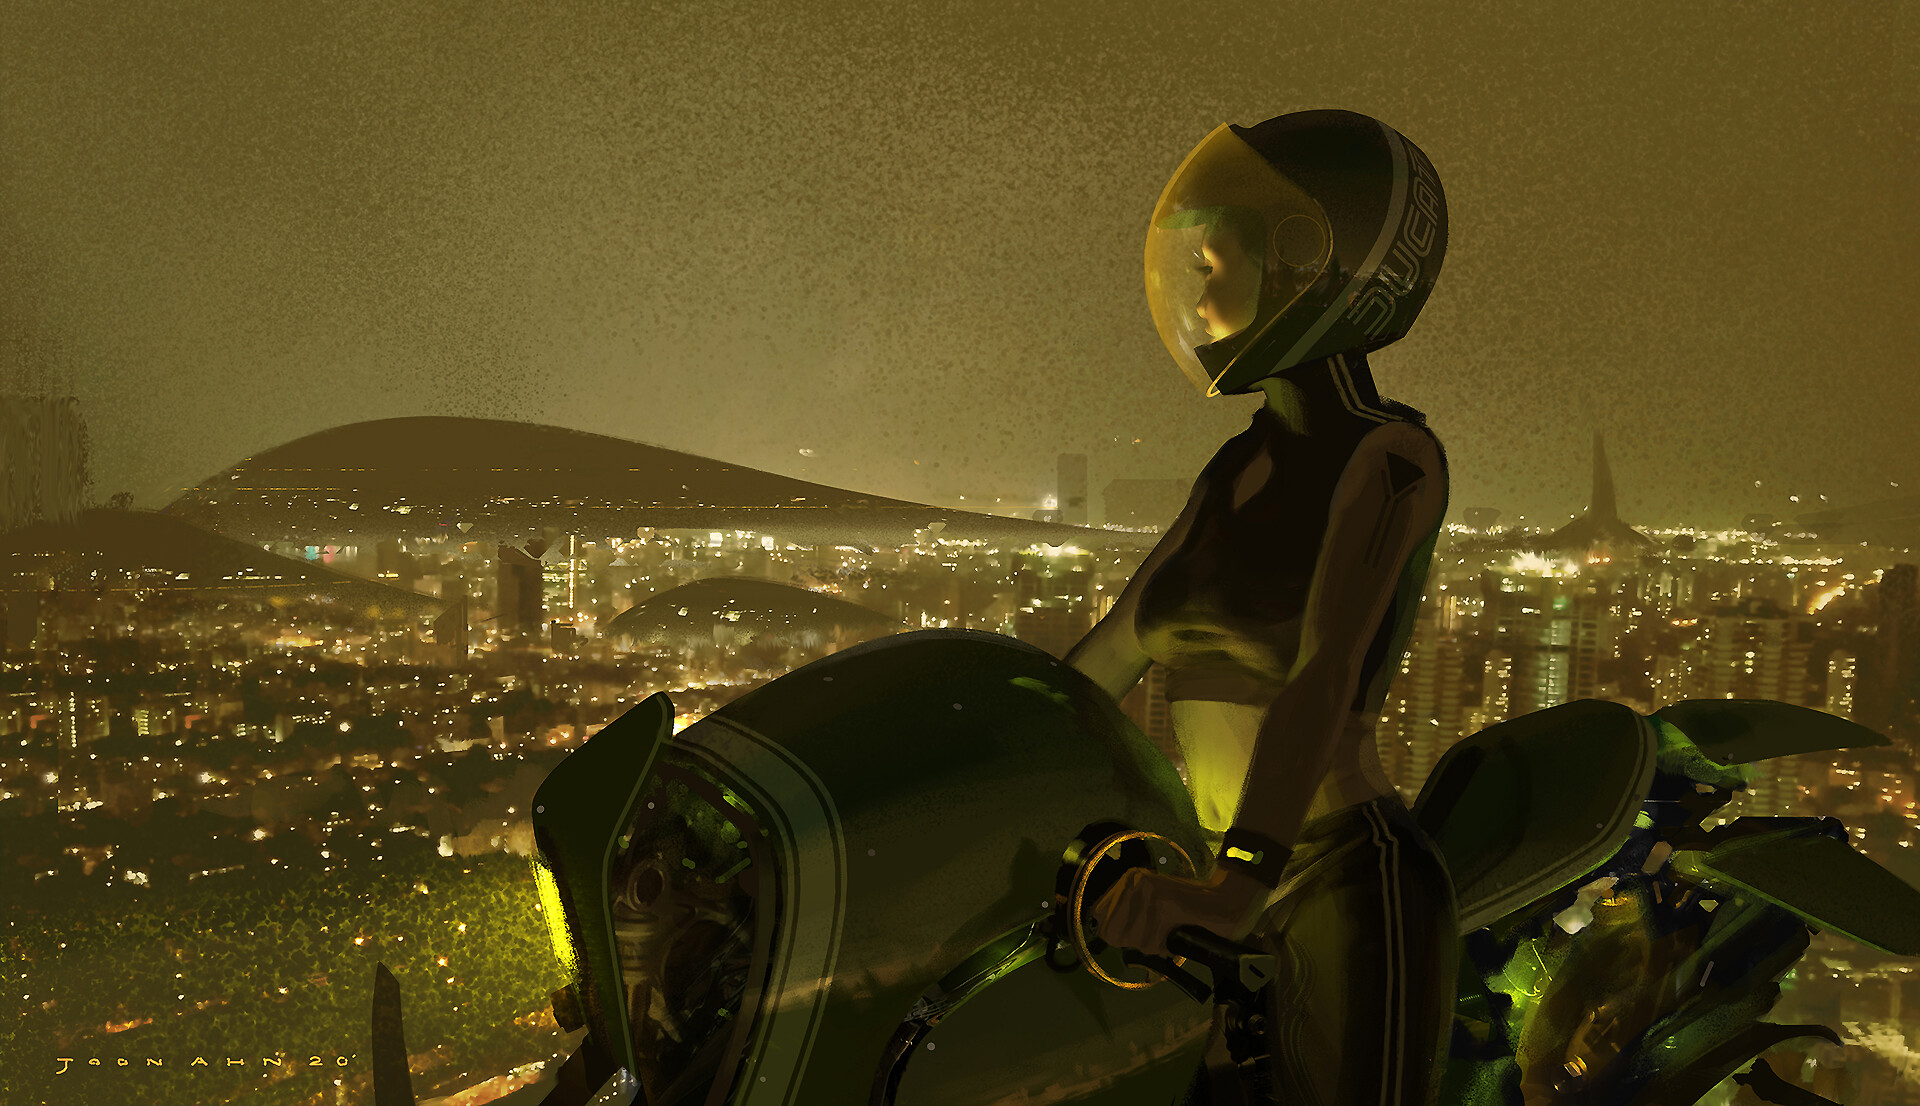 General 1920x1106 women motorcycle city digital art helmet cityscape lights night science fiction motorbike helmet